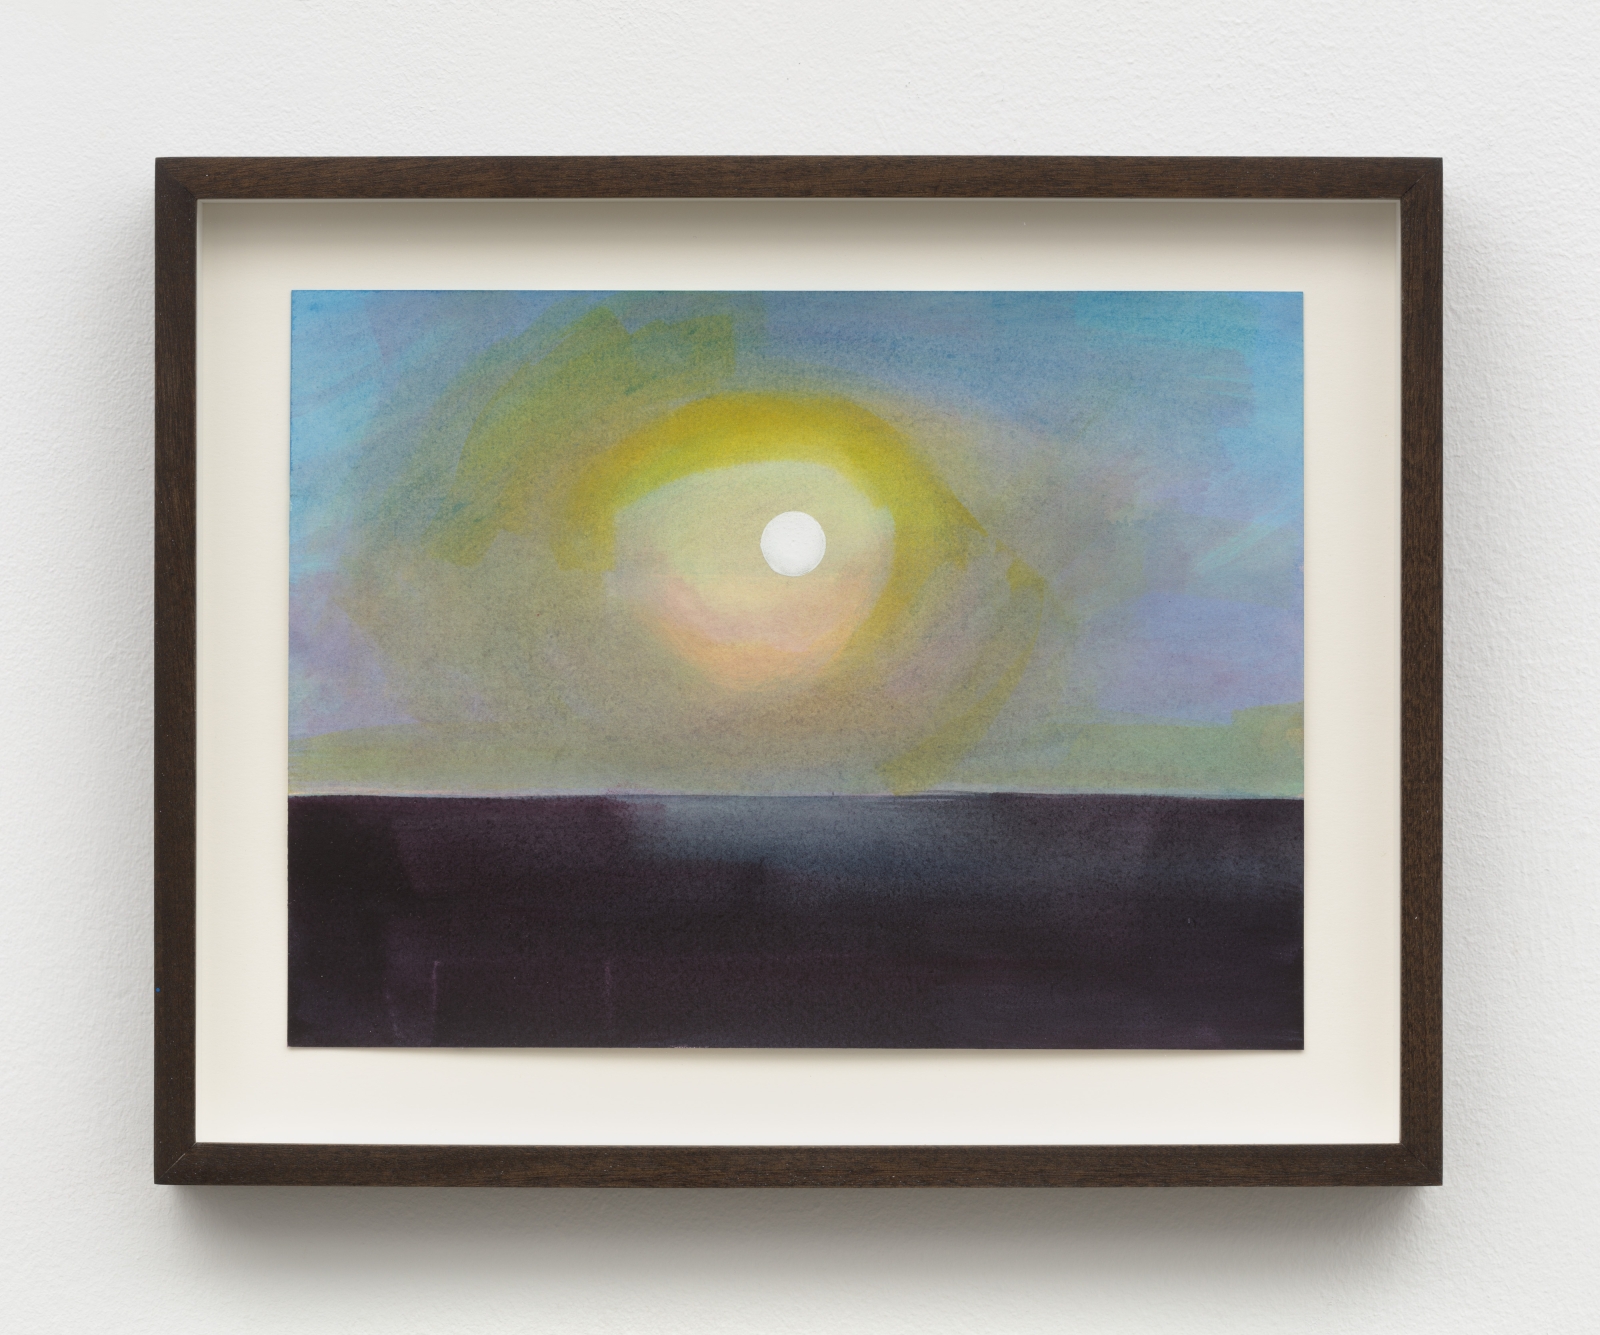 Adam Putnam
Untitled (Suite 9), 2019
ink on paper
9 x 12 ins. (22.9 x 30.5 cm)
framed: 12 1/8 x 15 1/4 ins. (30.8 x 38.7 cm)